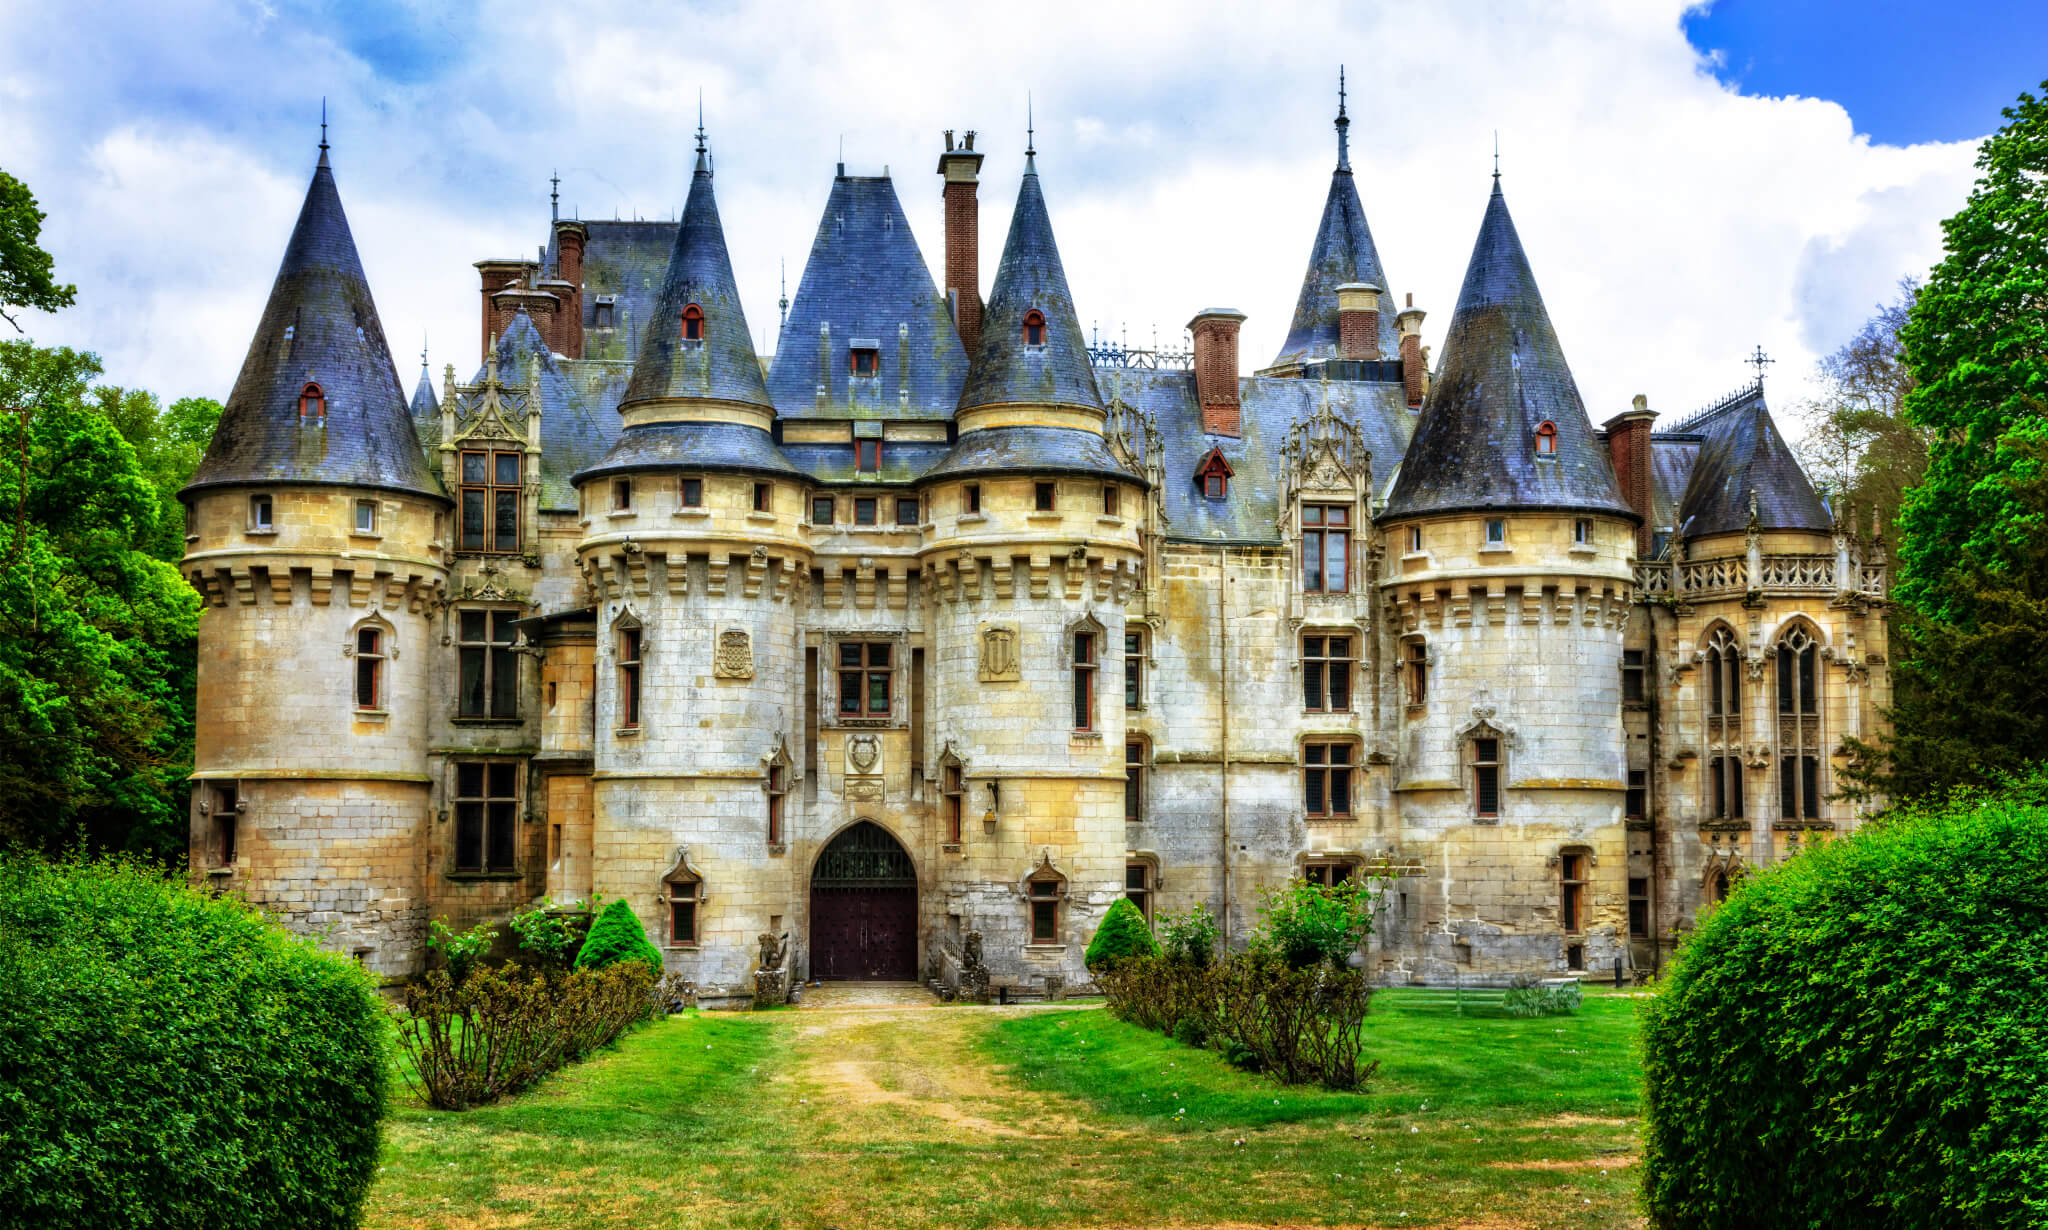 Impressive fairy tale castles of France,  il de france region